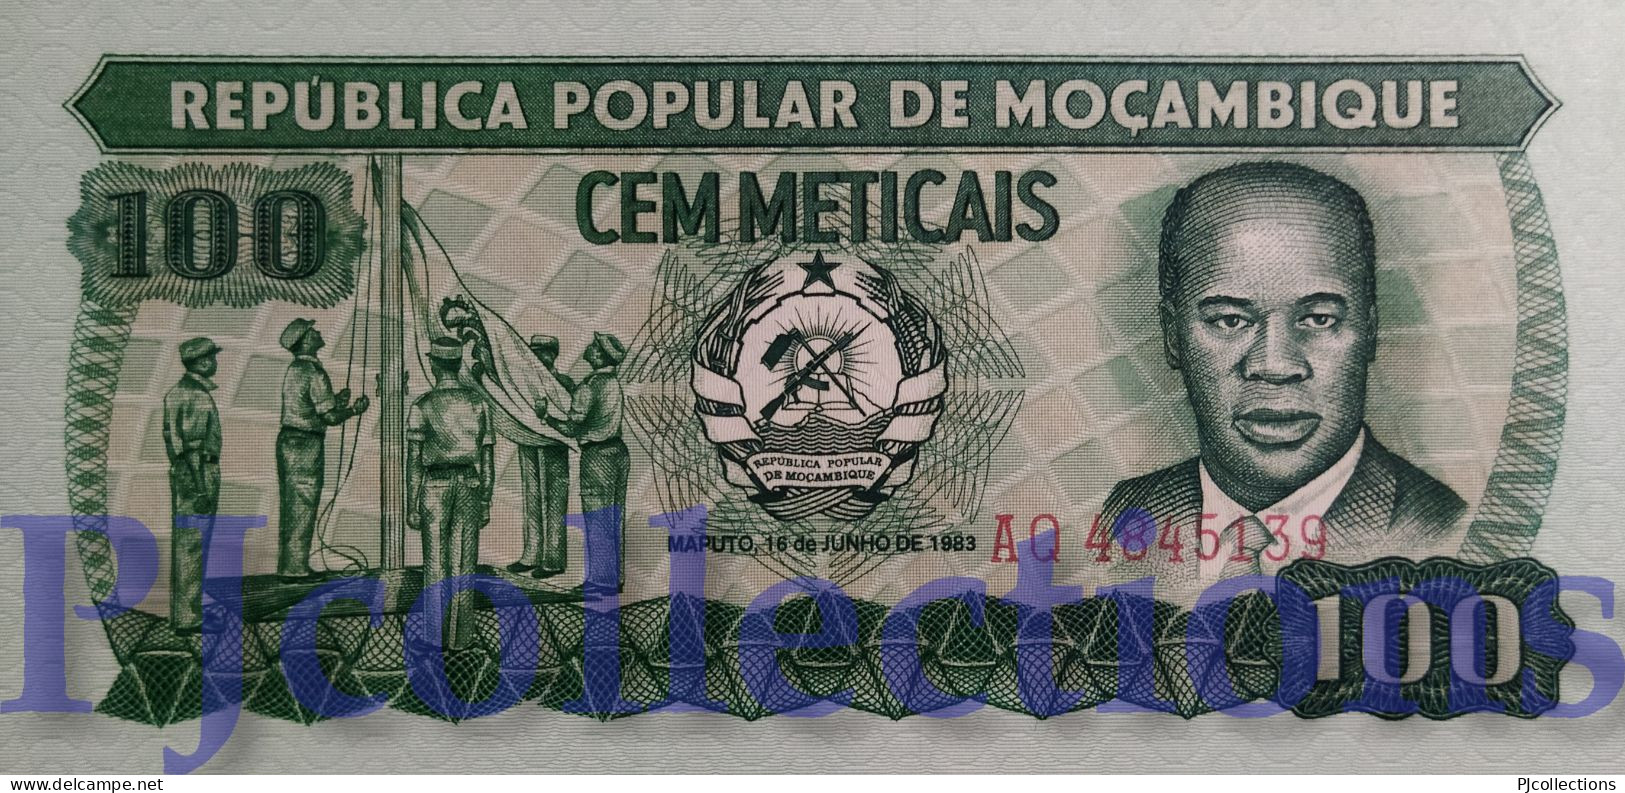 MOZAMBIQUE 100 ESCUDOS 1983 PICK 130a UNC - Mozambique